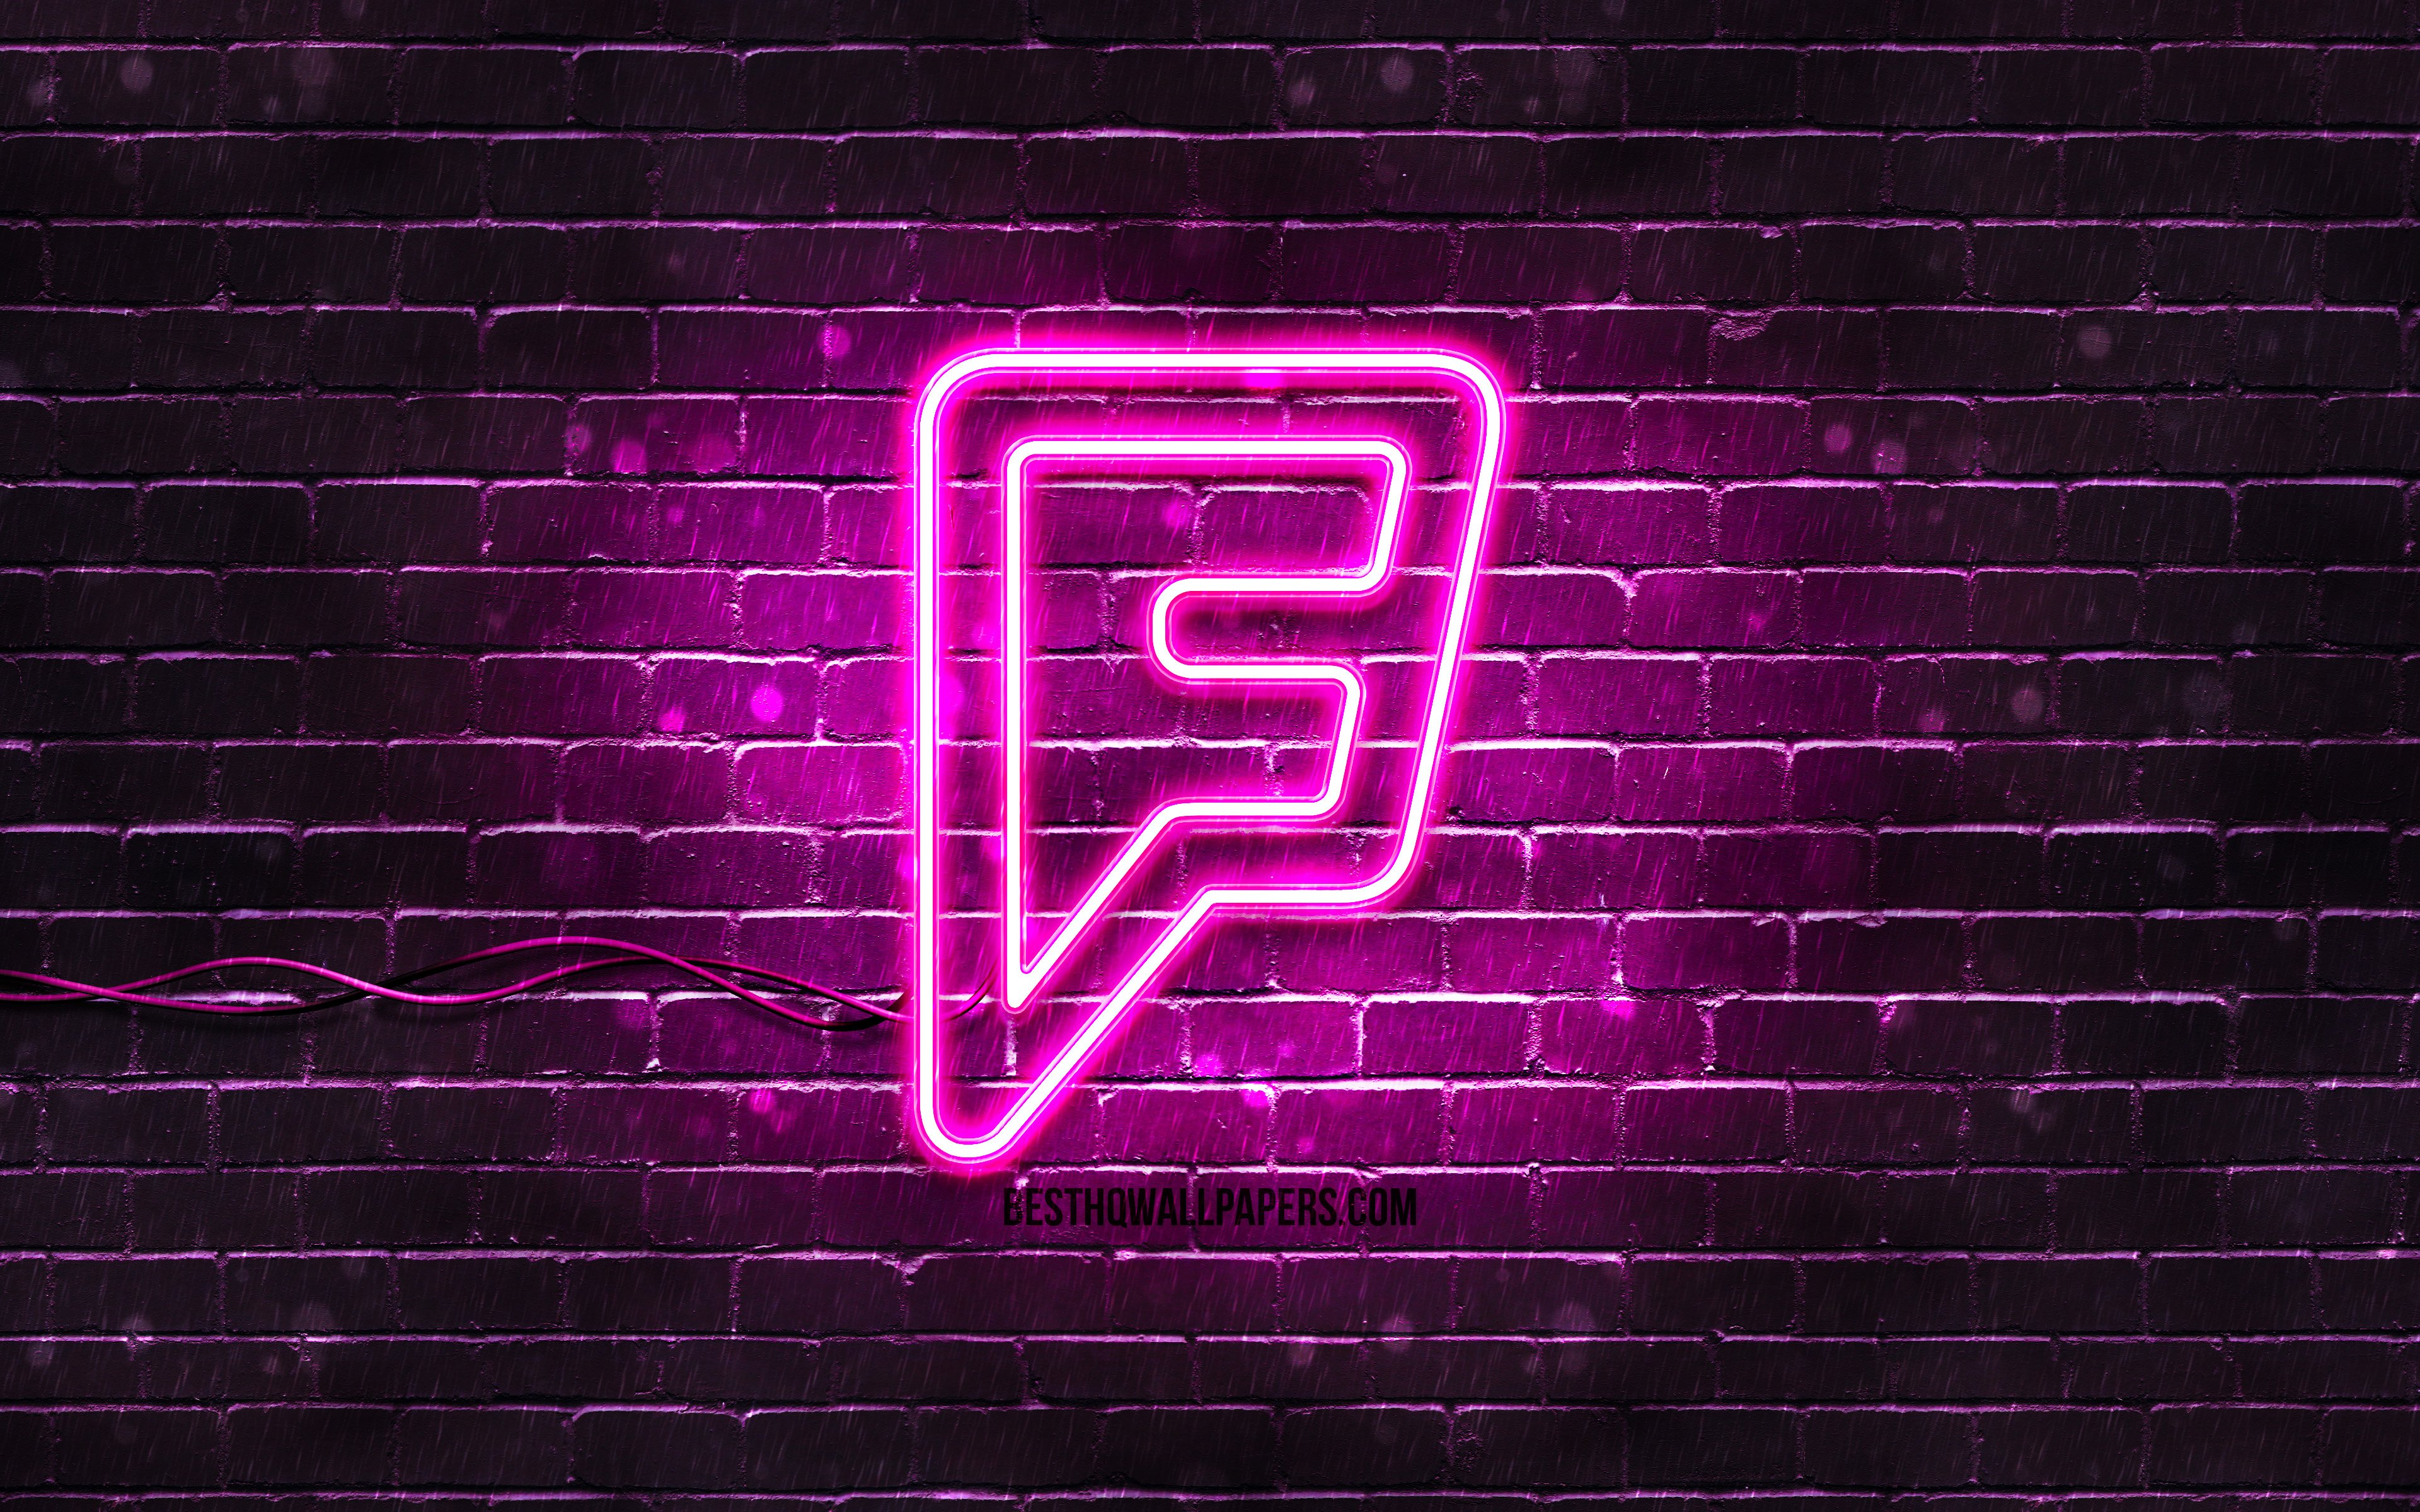 Download wallpapers Foursquare purple logo, 4k, purple brickwall ...